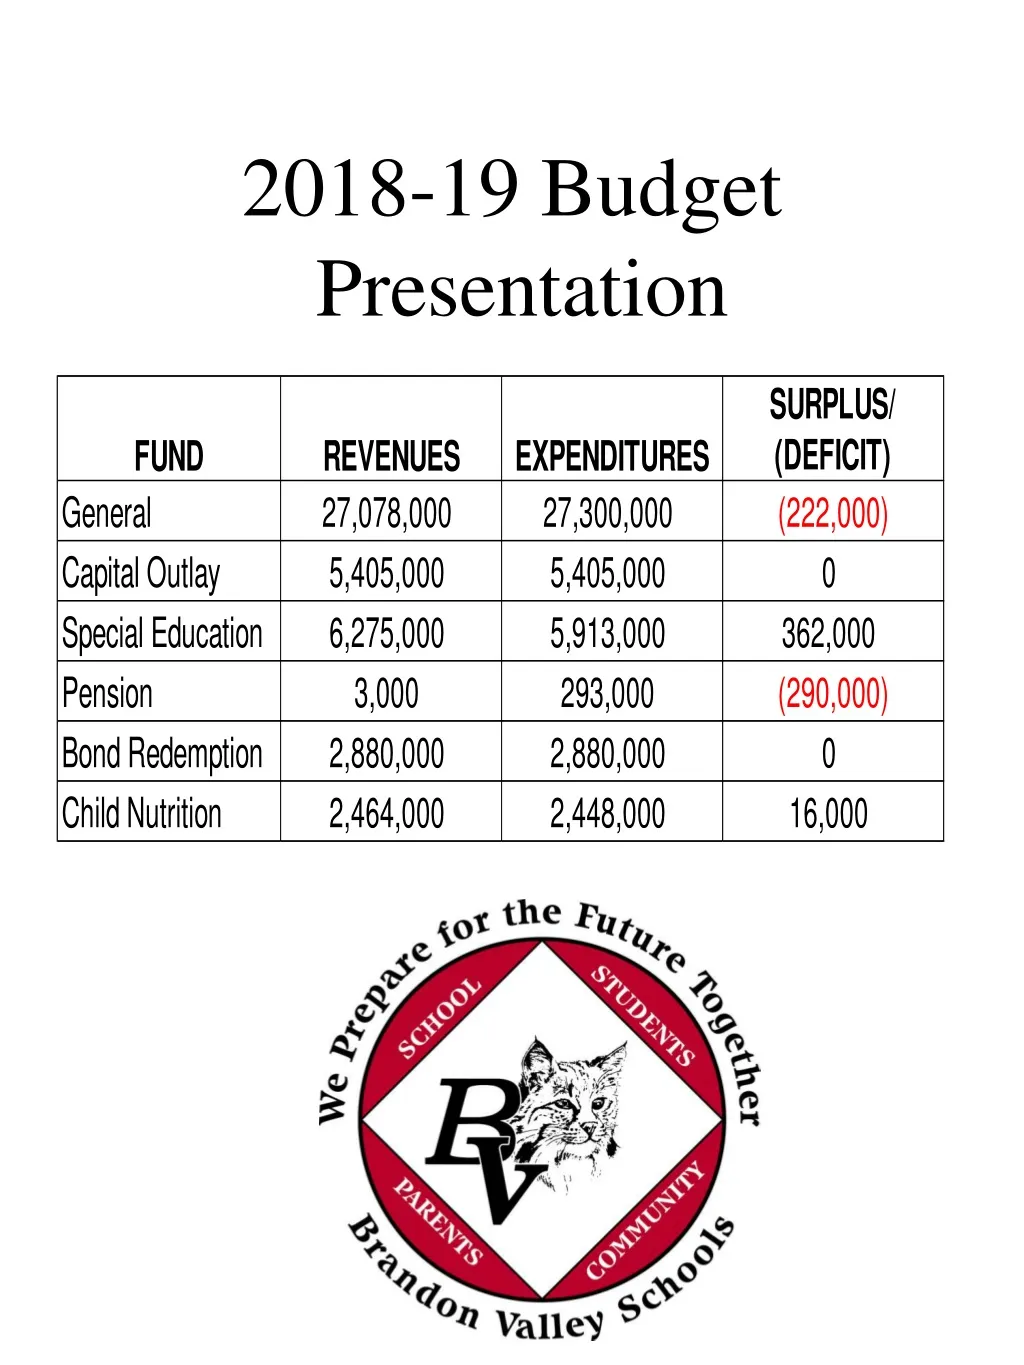 2018 19 budget presentation